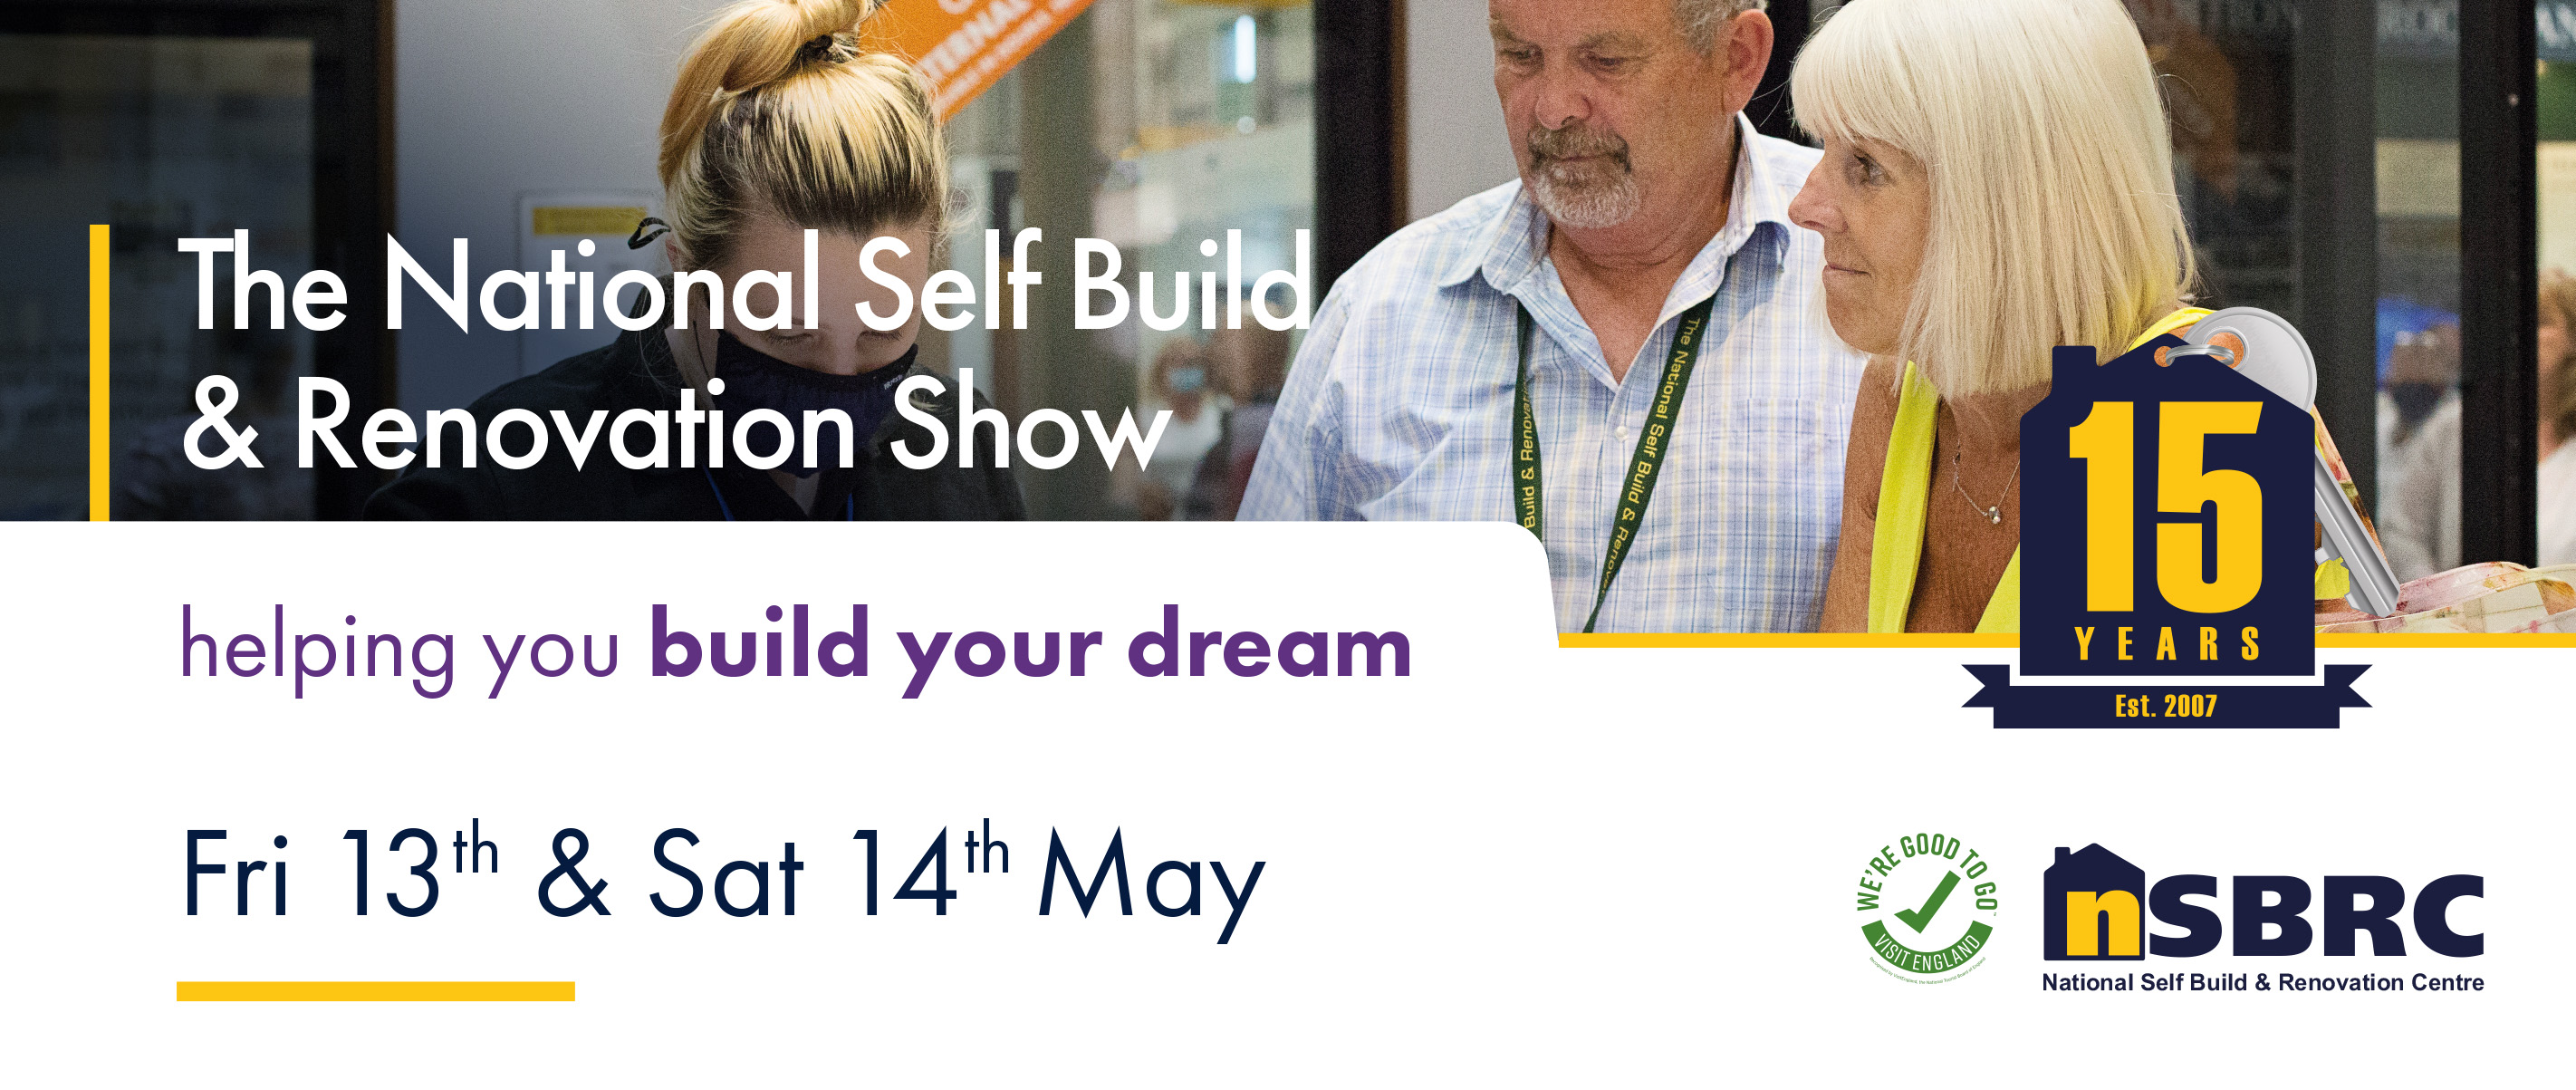 The National Self Build & Renovation Show – Friday 13th & Saturday 14th May